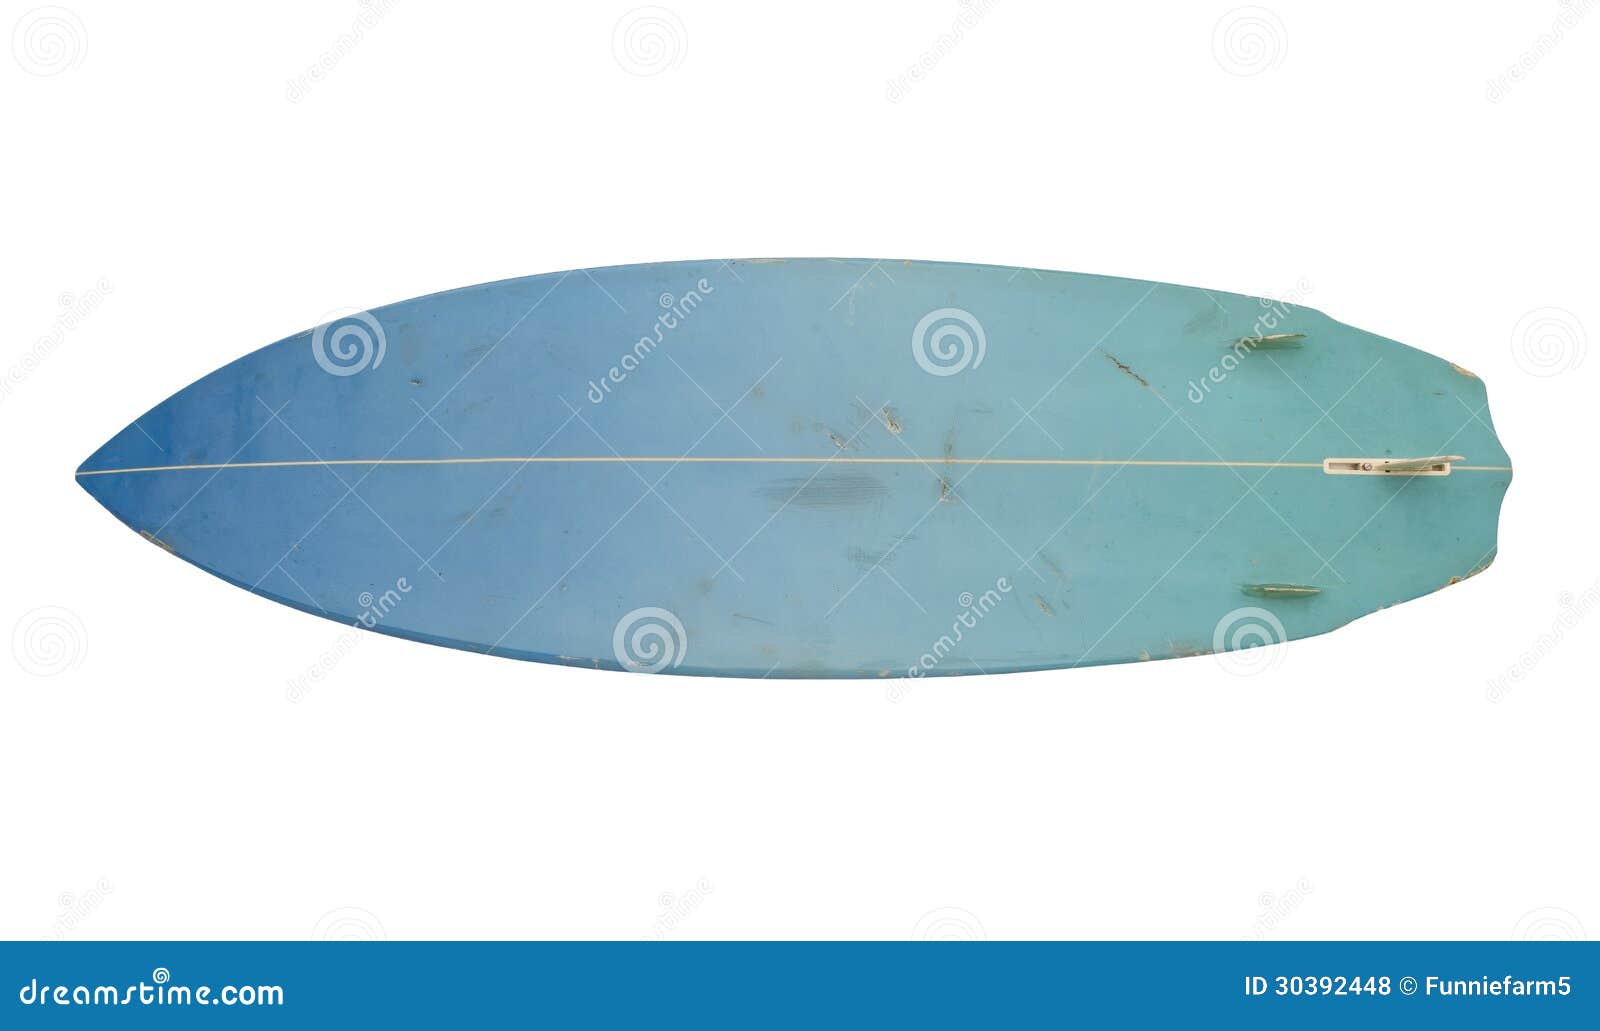 vintage 80's surfboard  on white